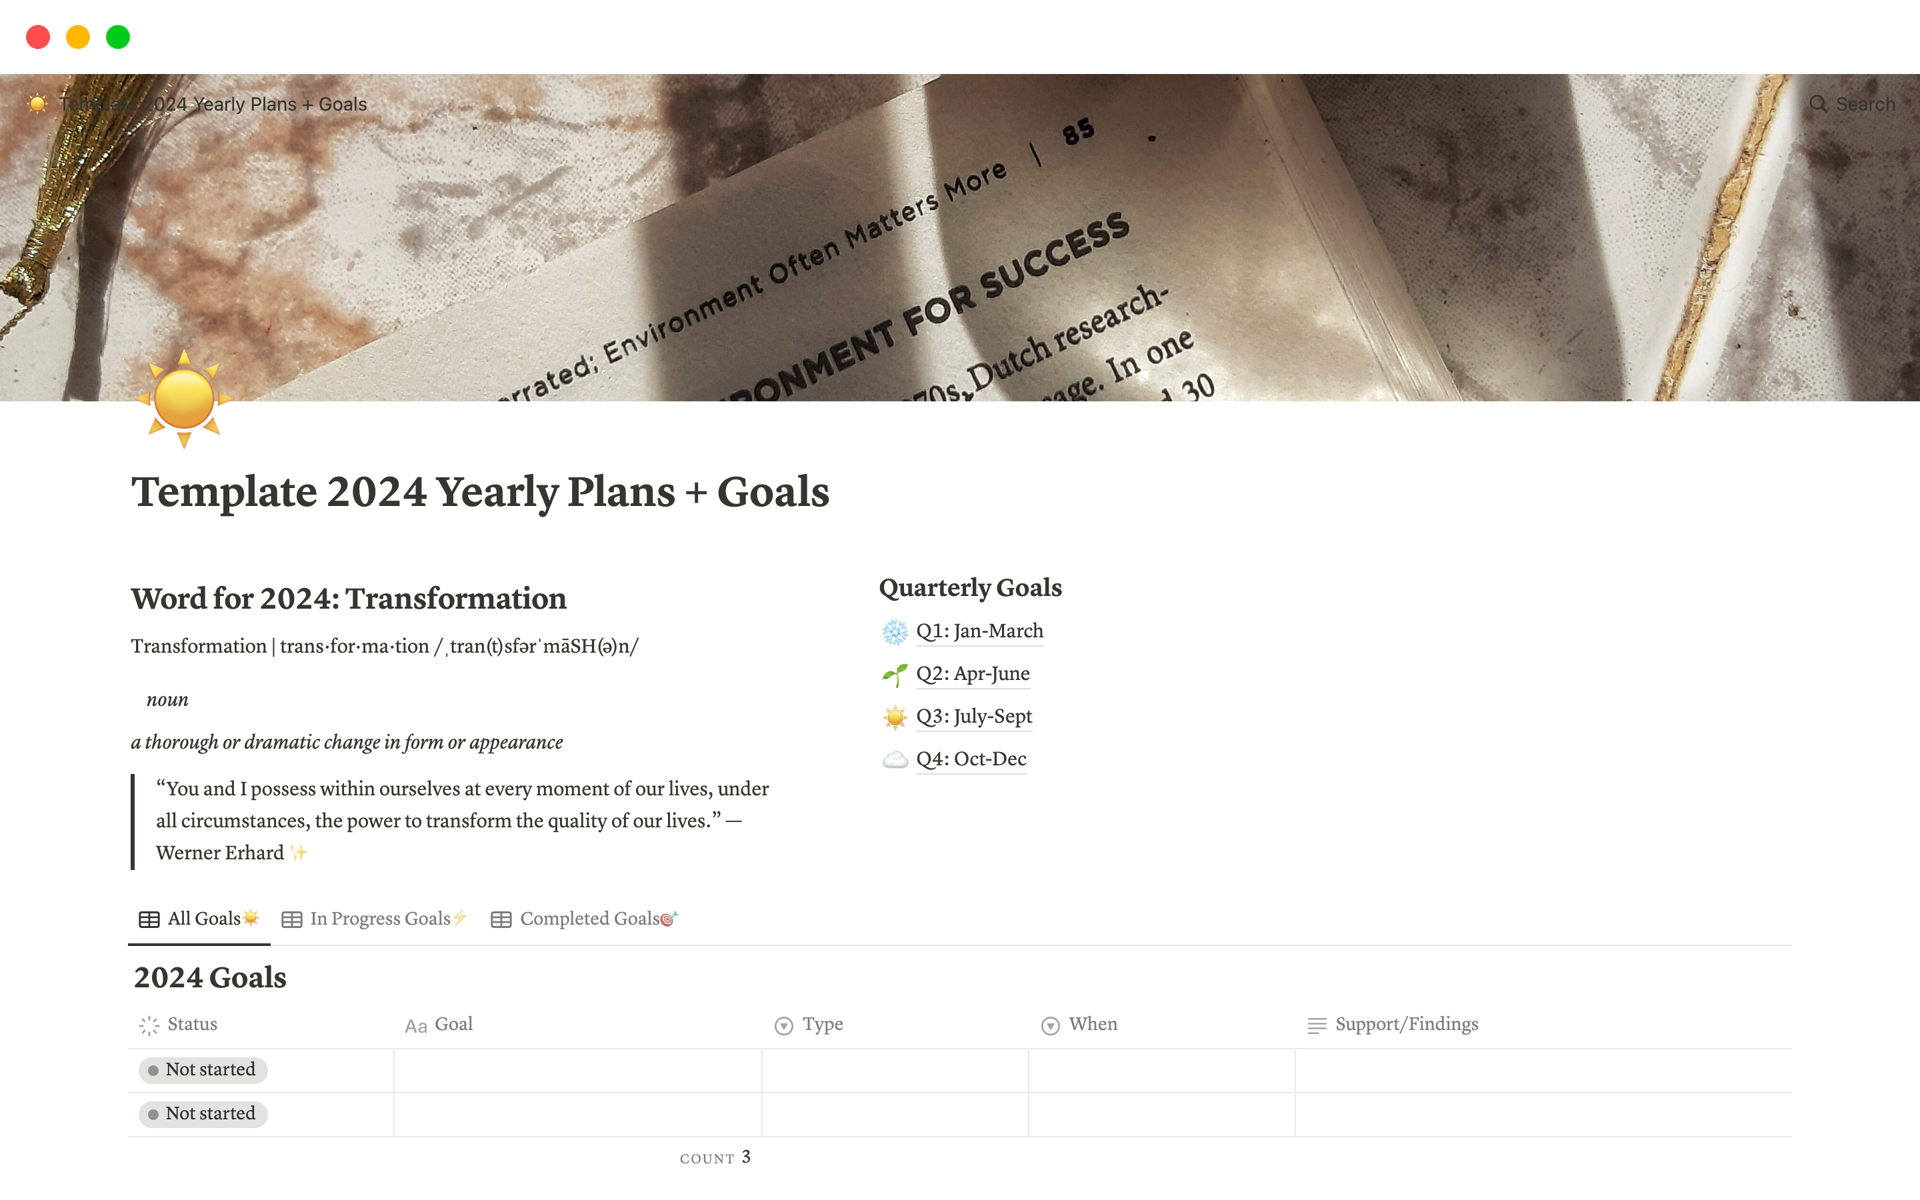 Vista previa de una plantilla para 2024 Yearly Plans + Goals 